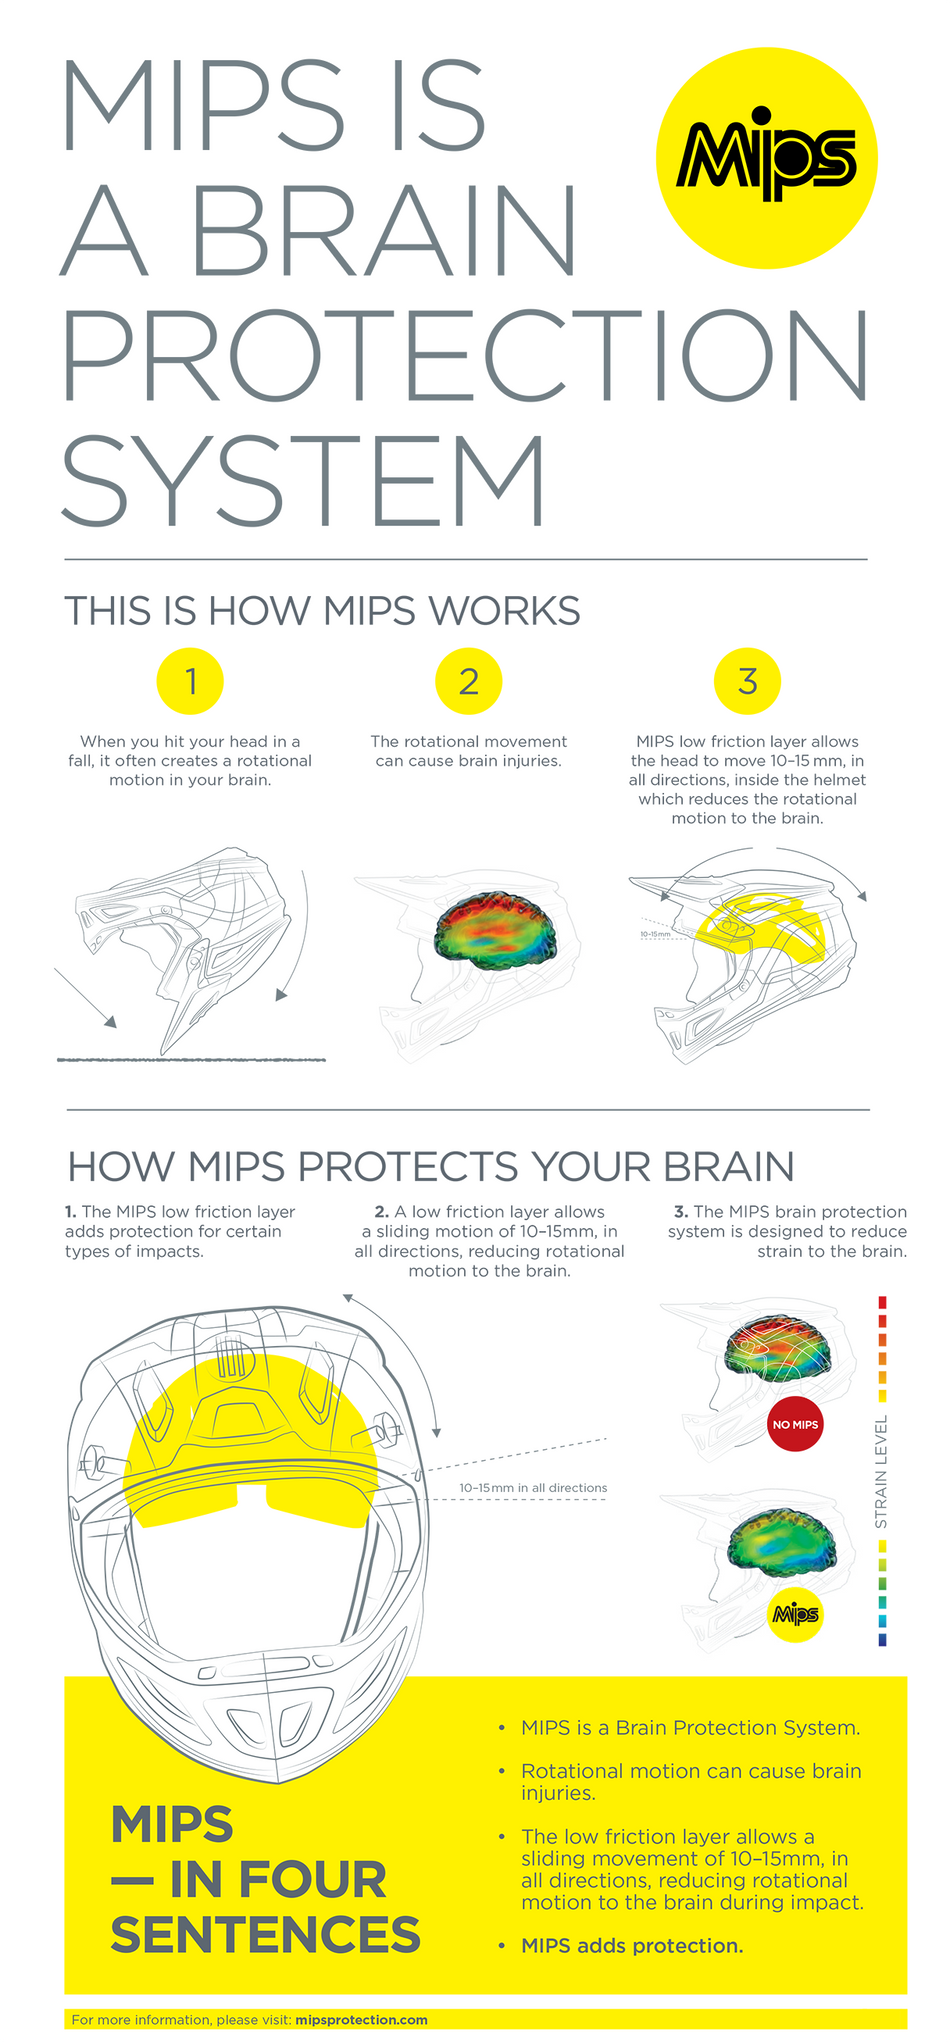 ALPINESTARS Supertech M8 Helmet - Echo - MIPS® - Black/Red/Gloss - Medium 8302621-1116-MD